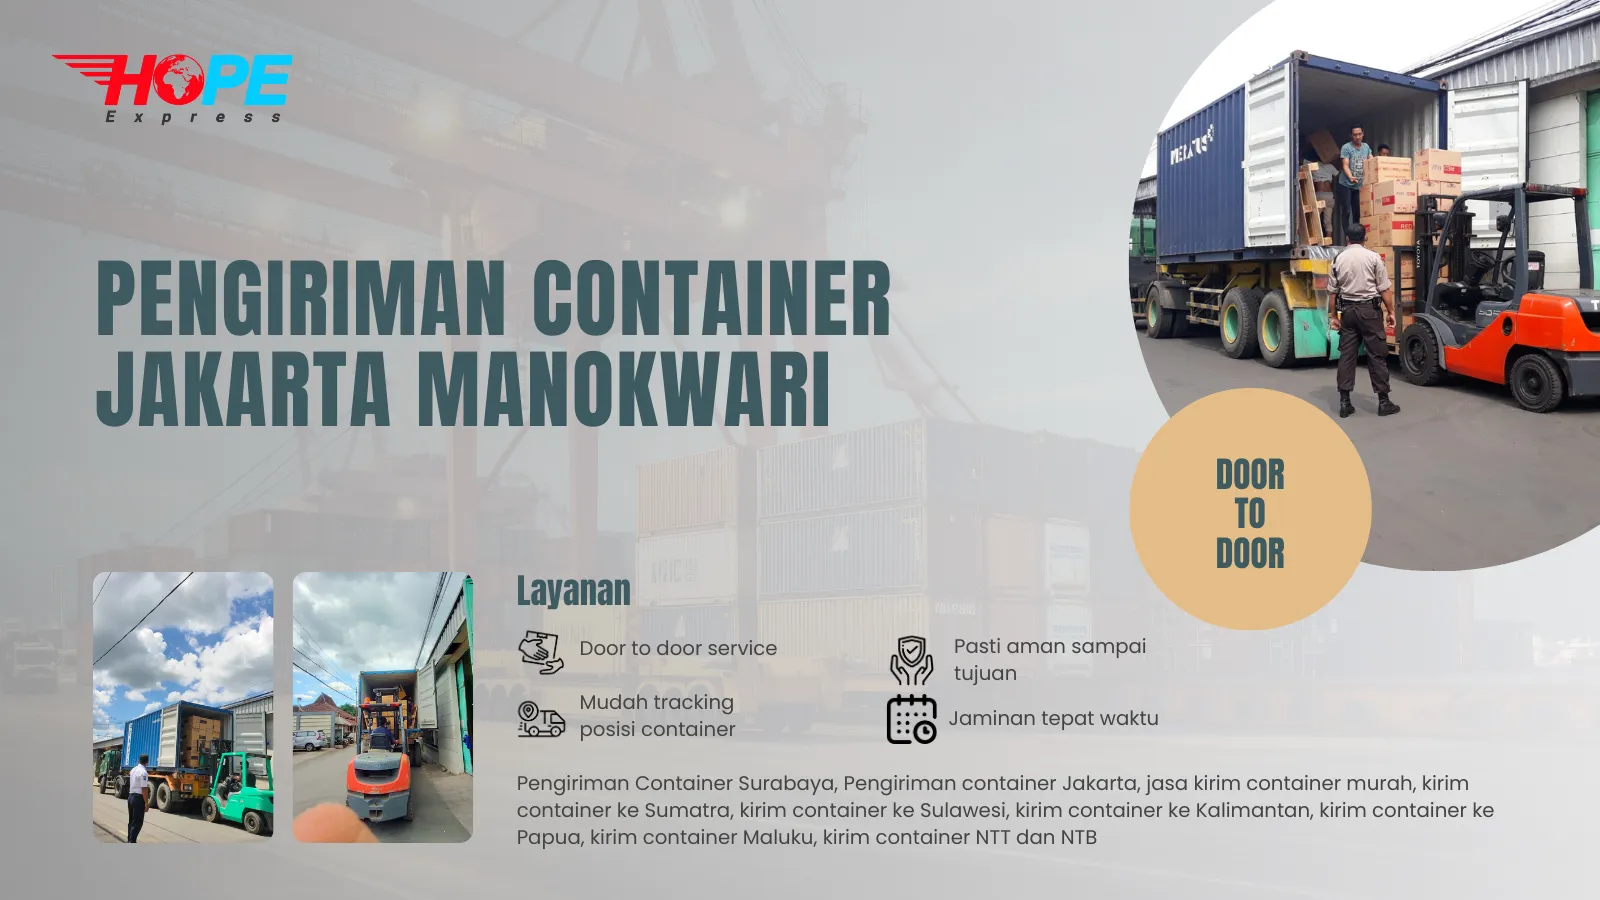 Pengiriman Container Jakarta Manokwari